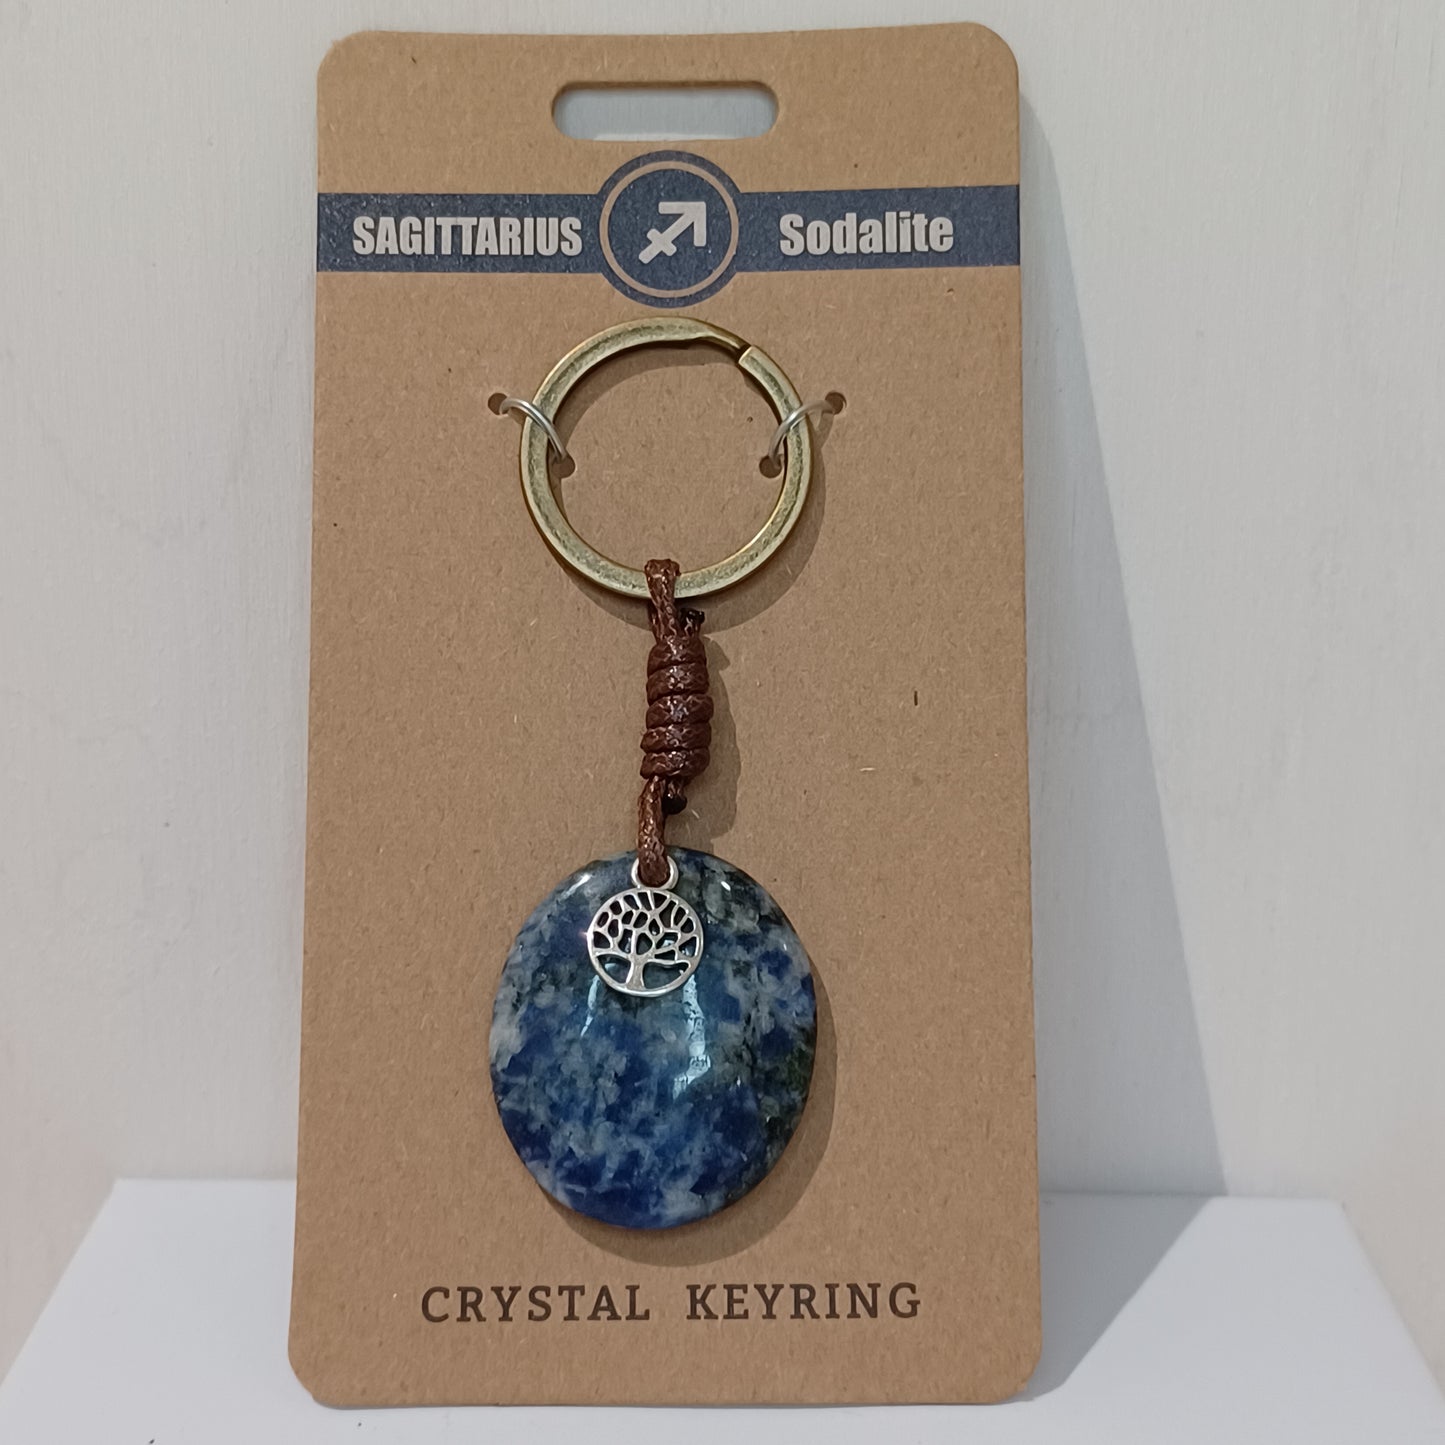 Crystal Keyring - Sagittarius Sodalite